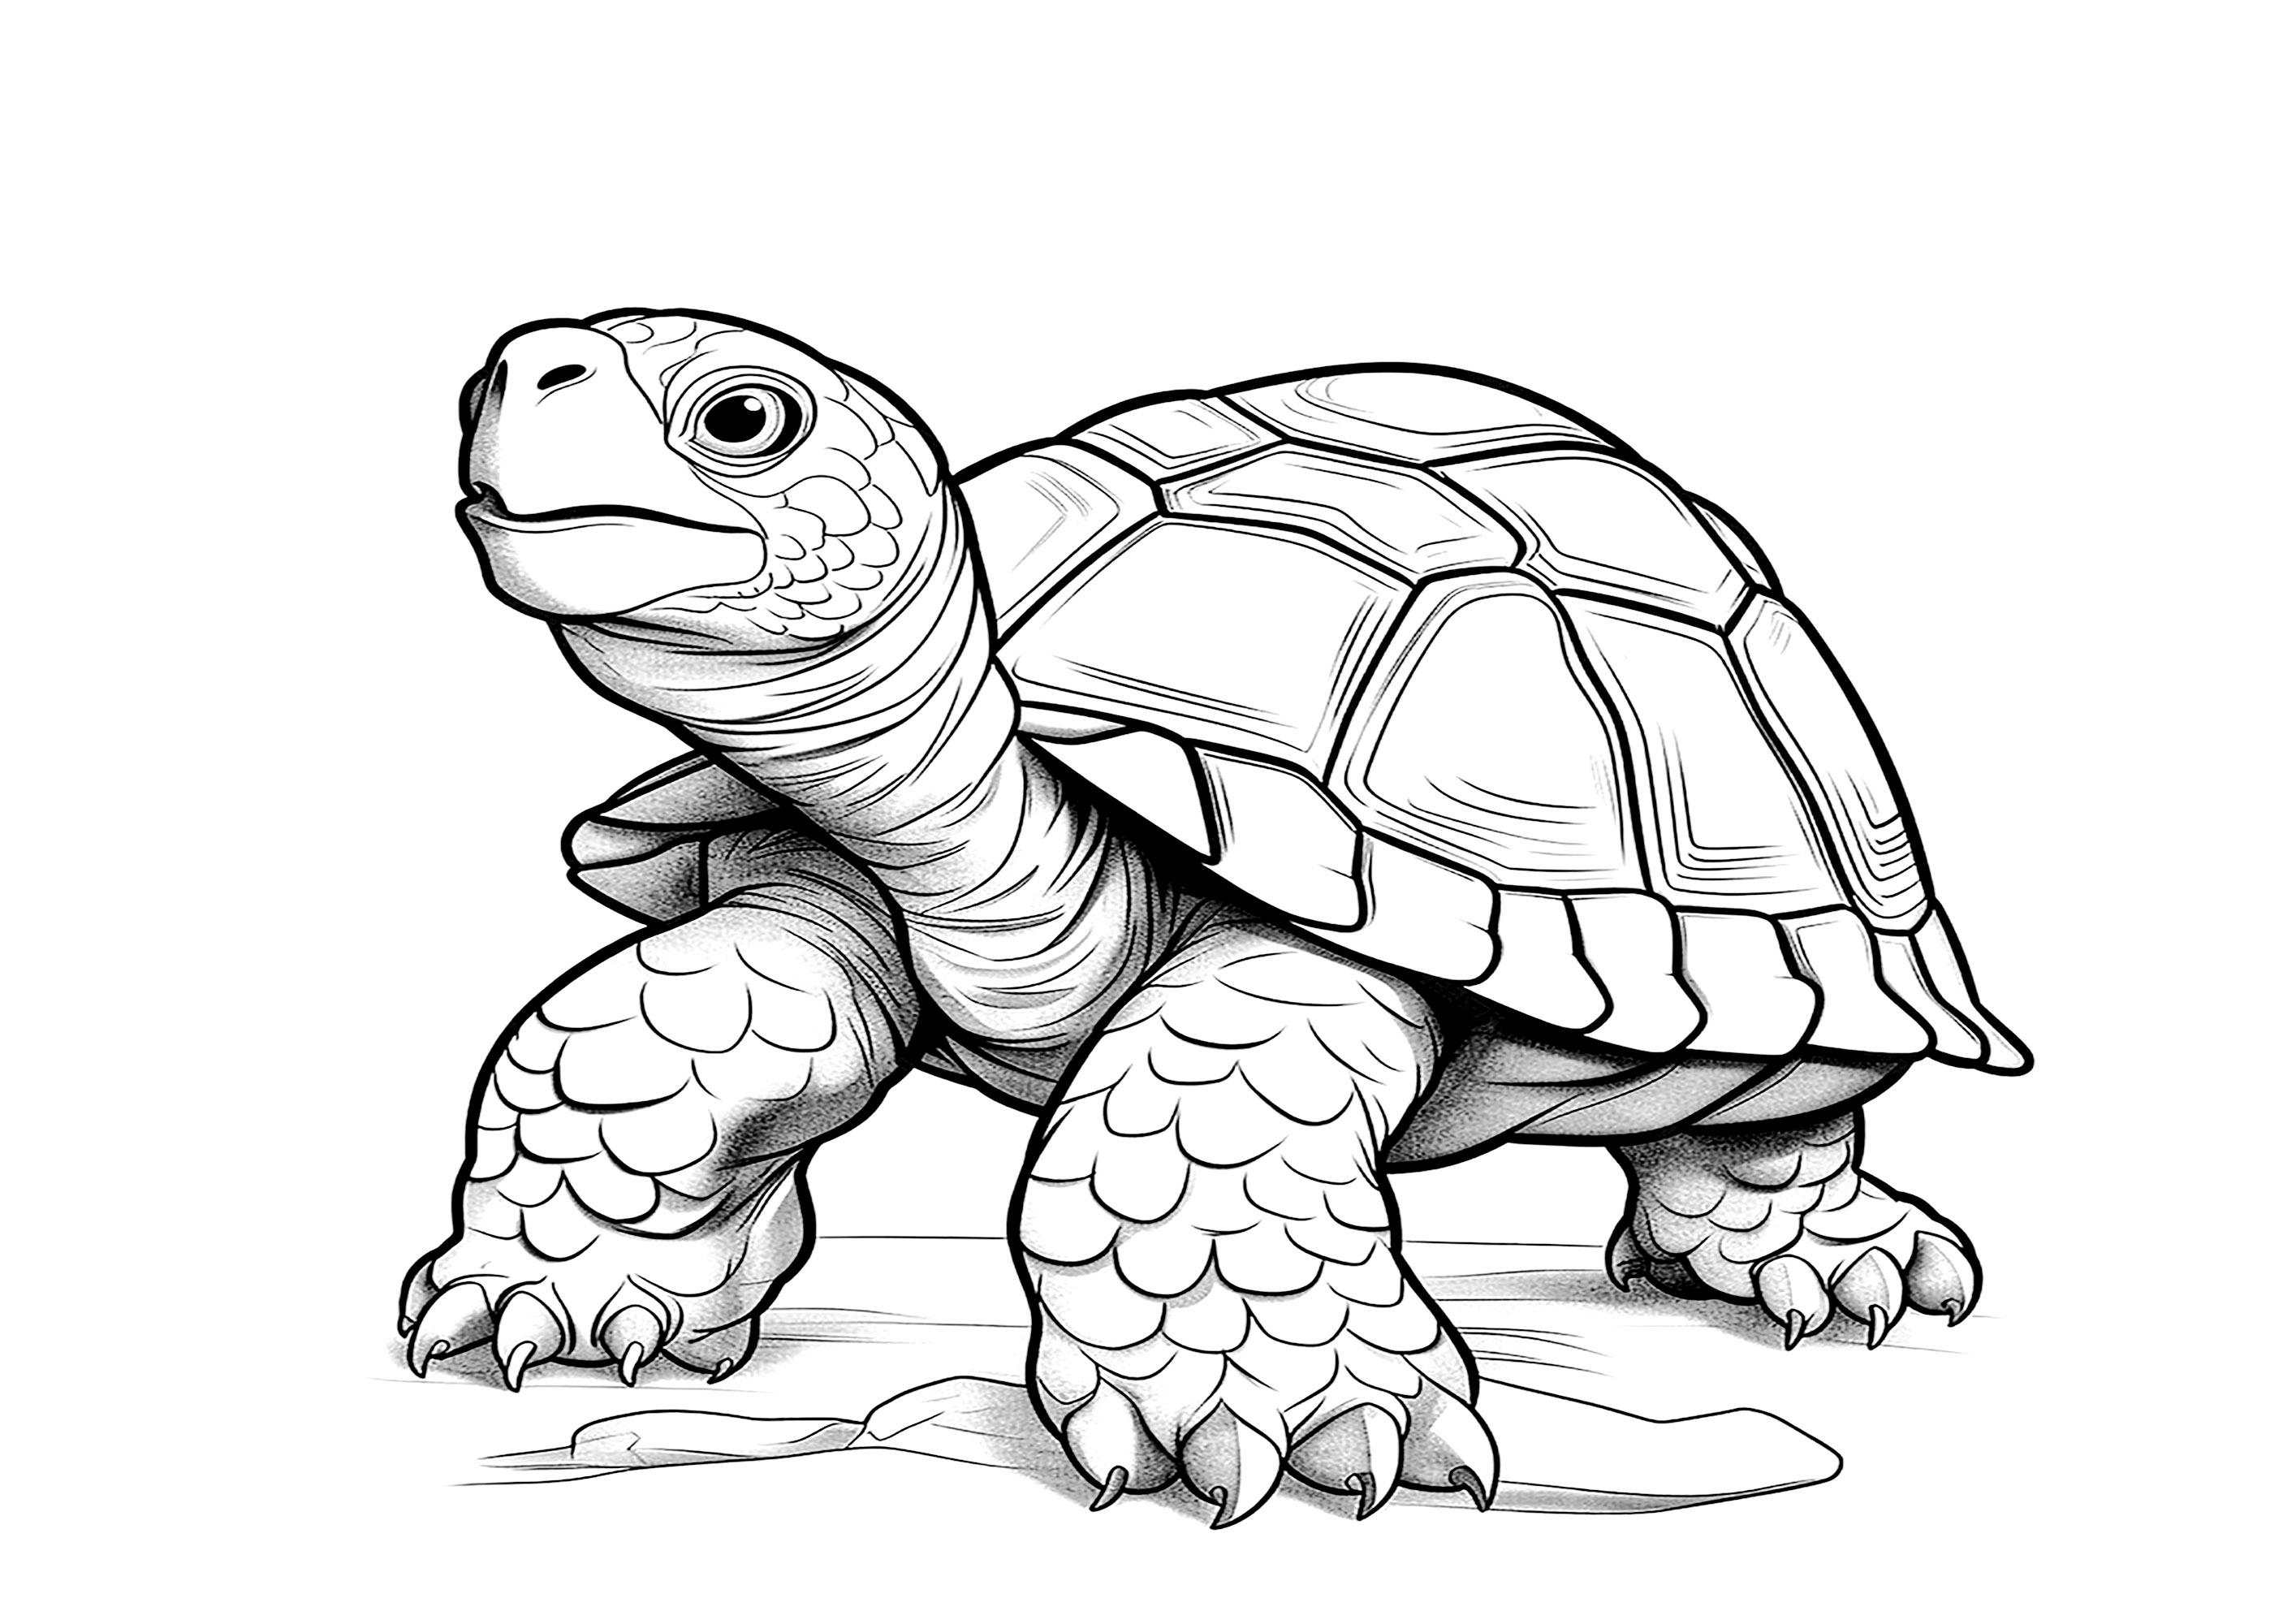 Dibujo realista de una bonita tortuga